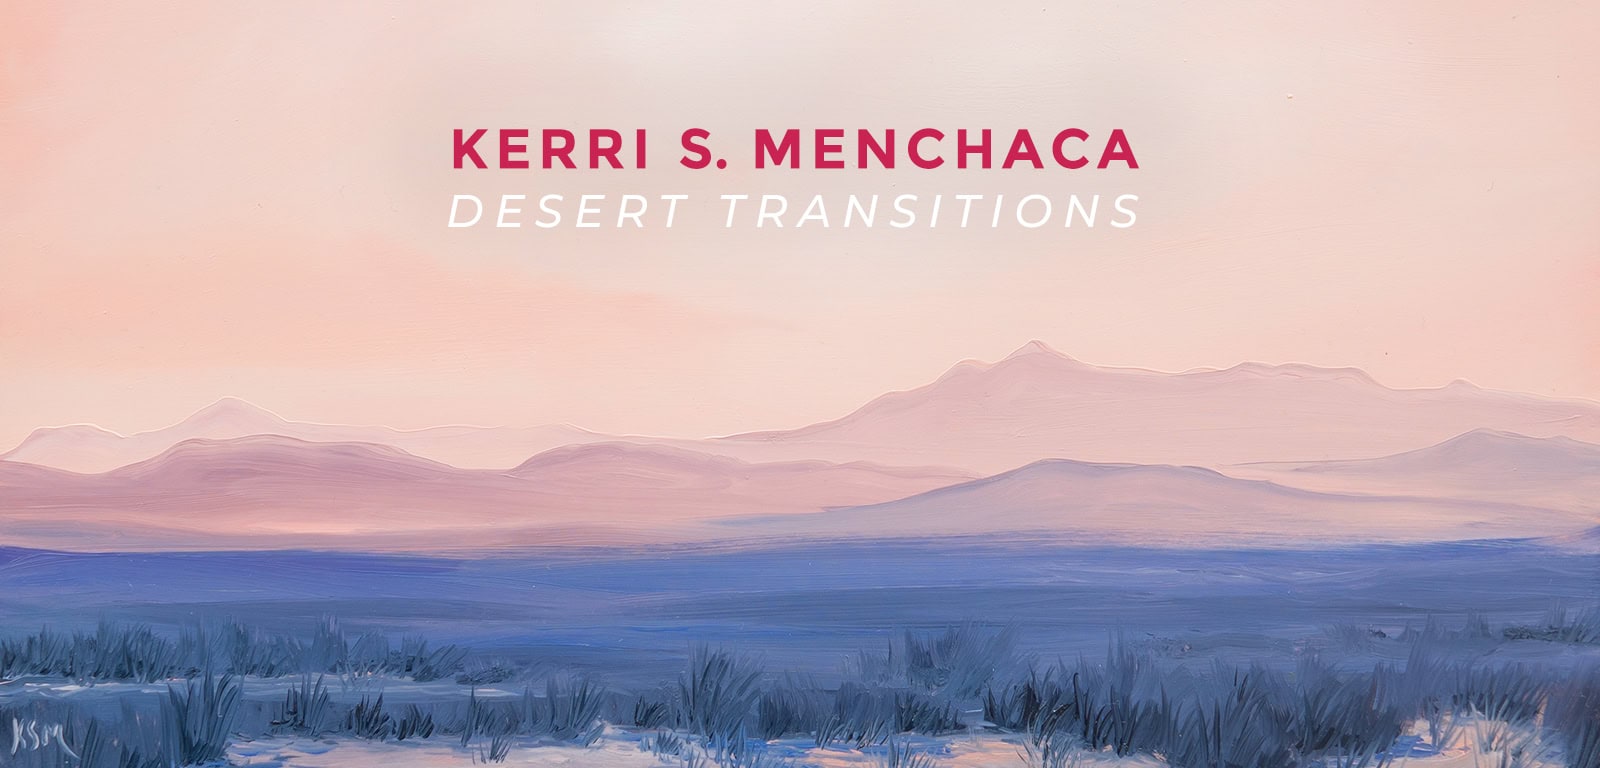 Kerri S. Menchaca at Western Gallery - Desert Transitions